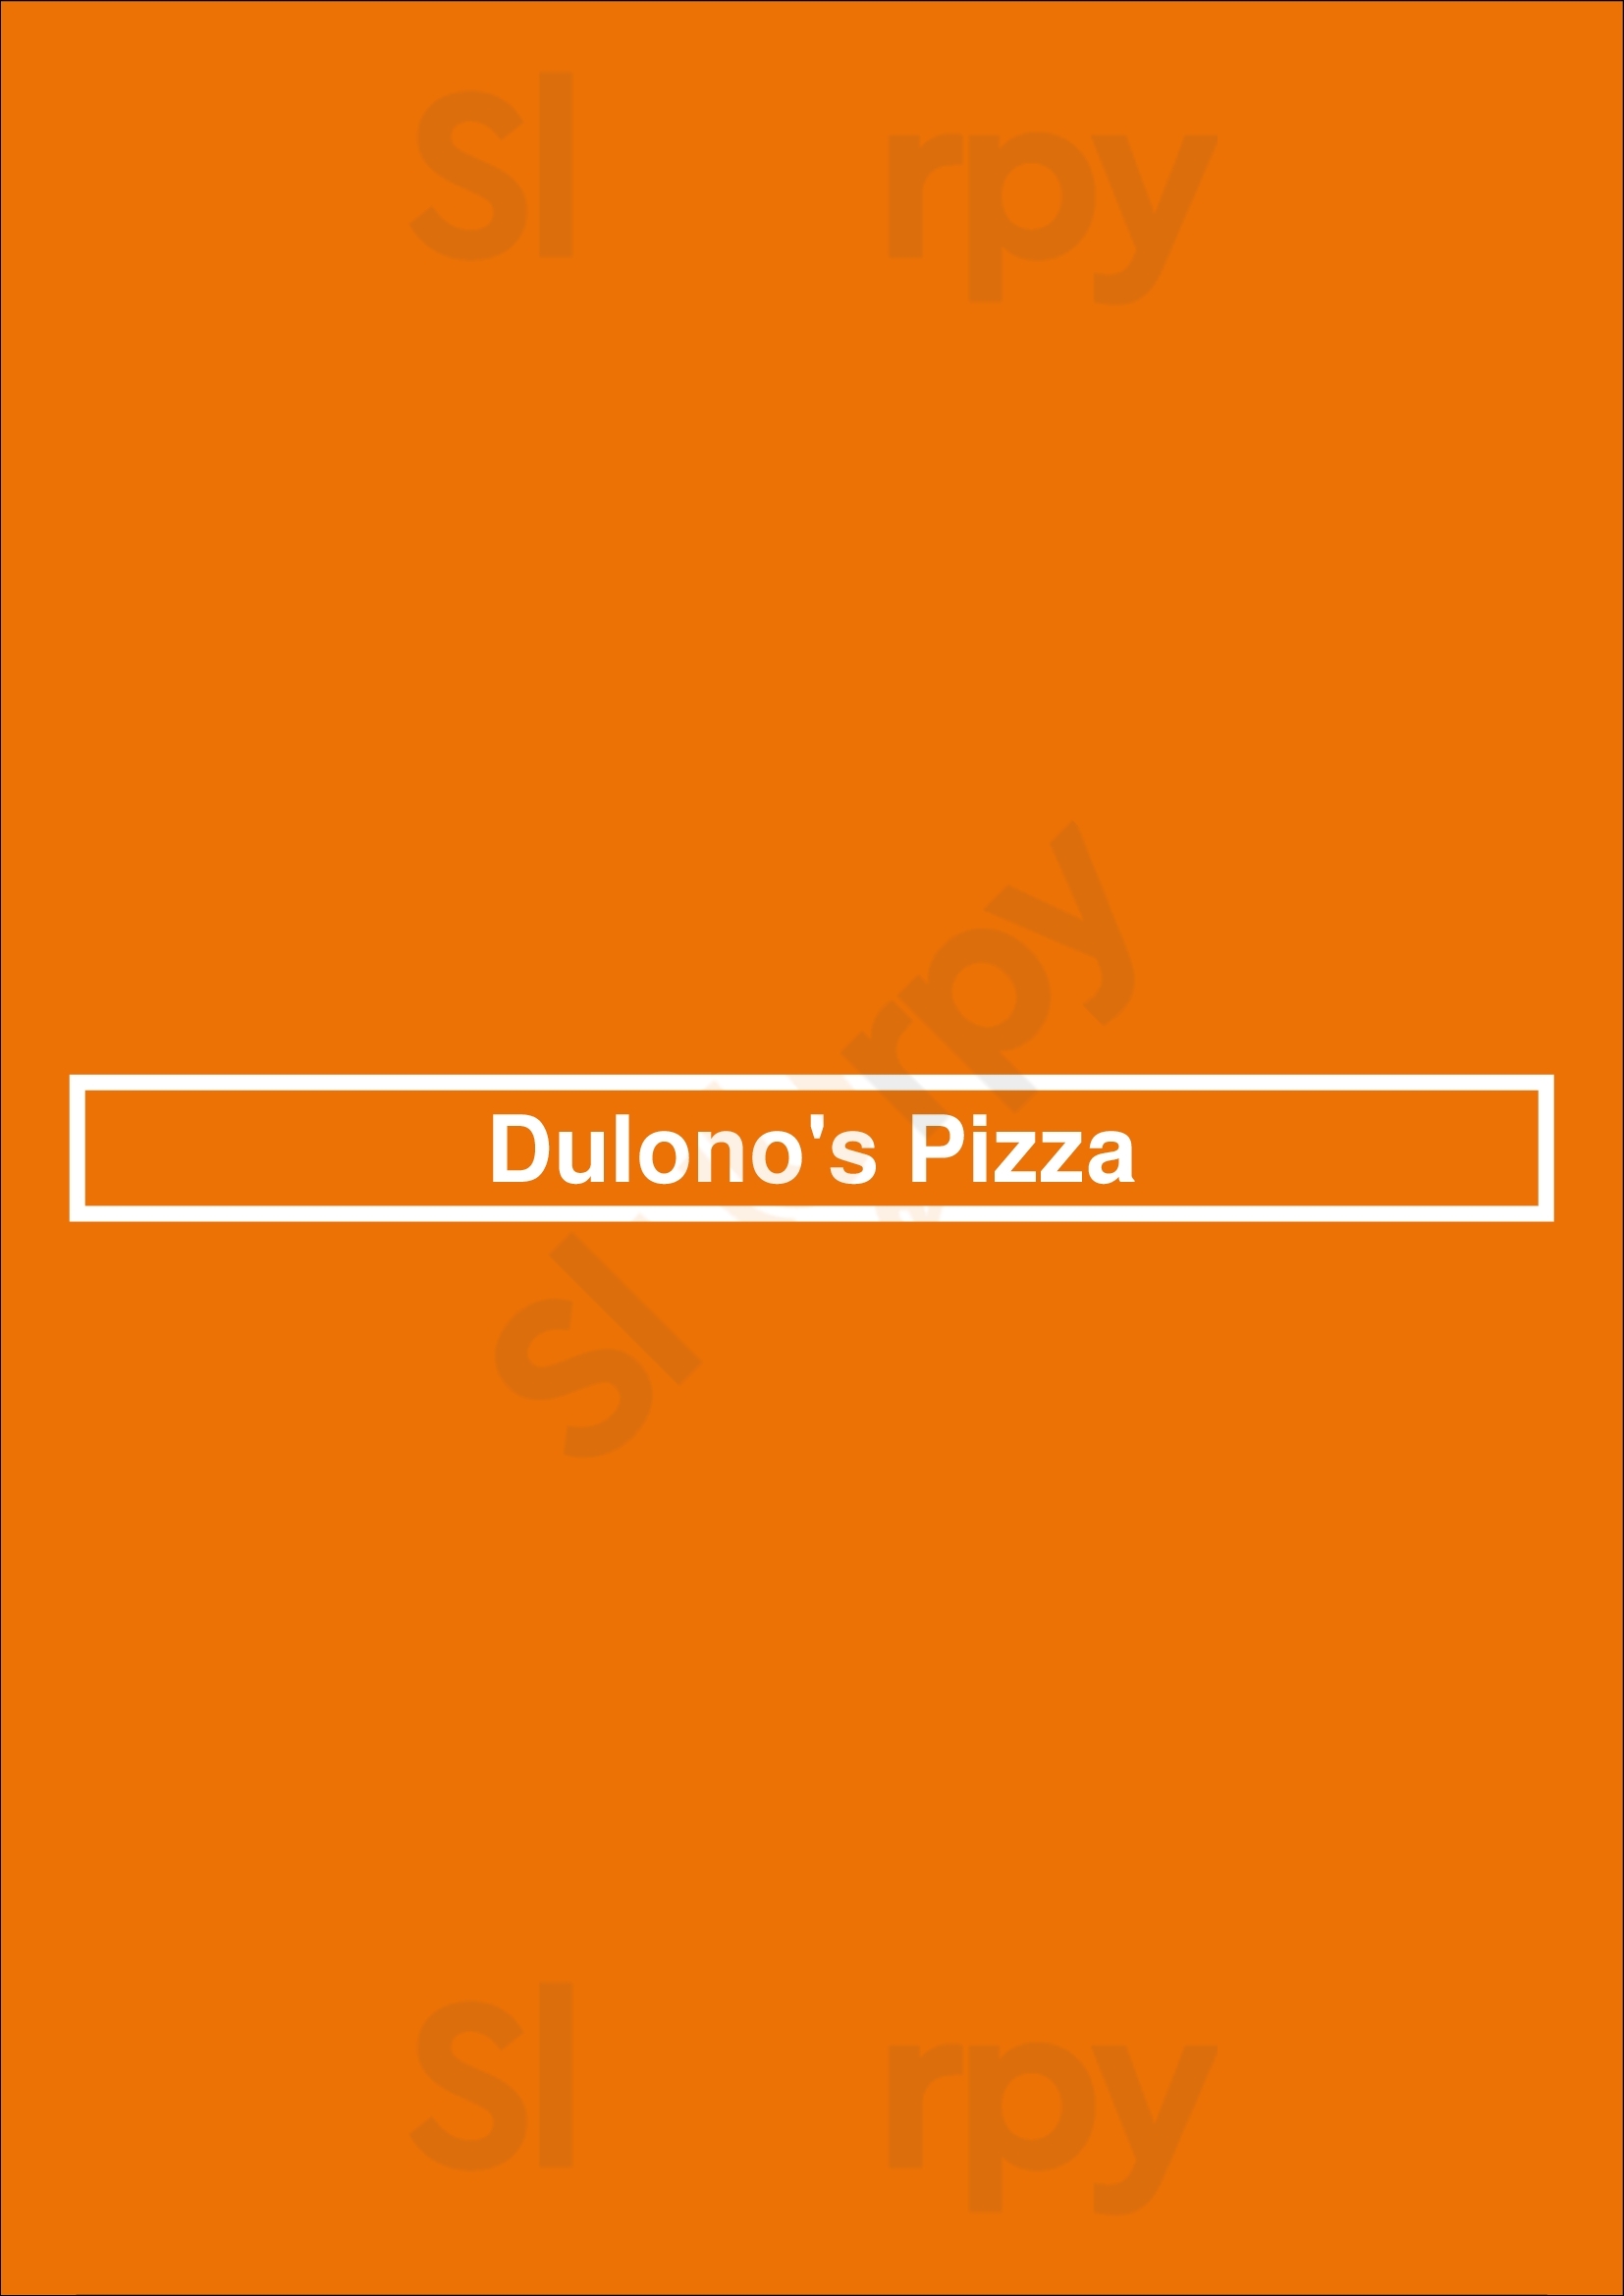 Dulono's Pizza & Bar Minneapolis Menu - 1